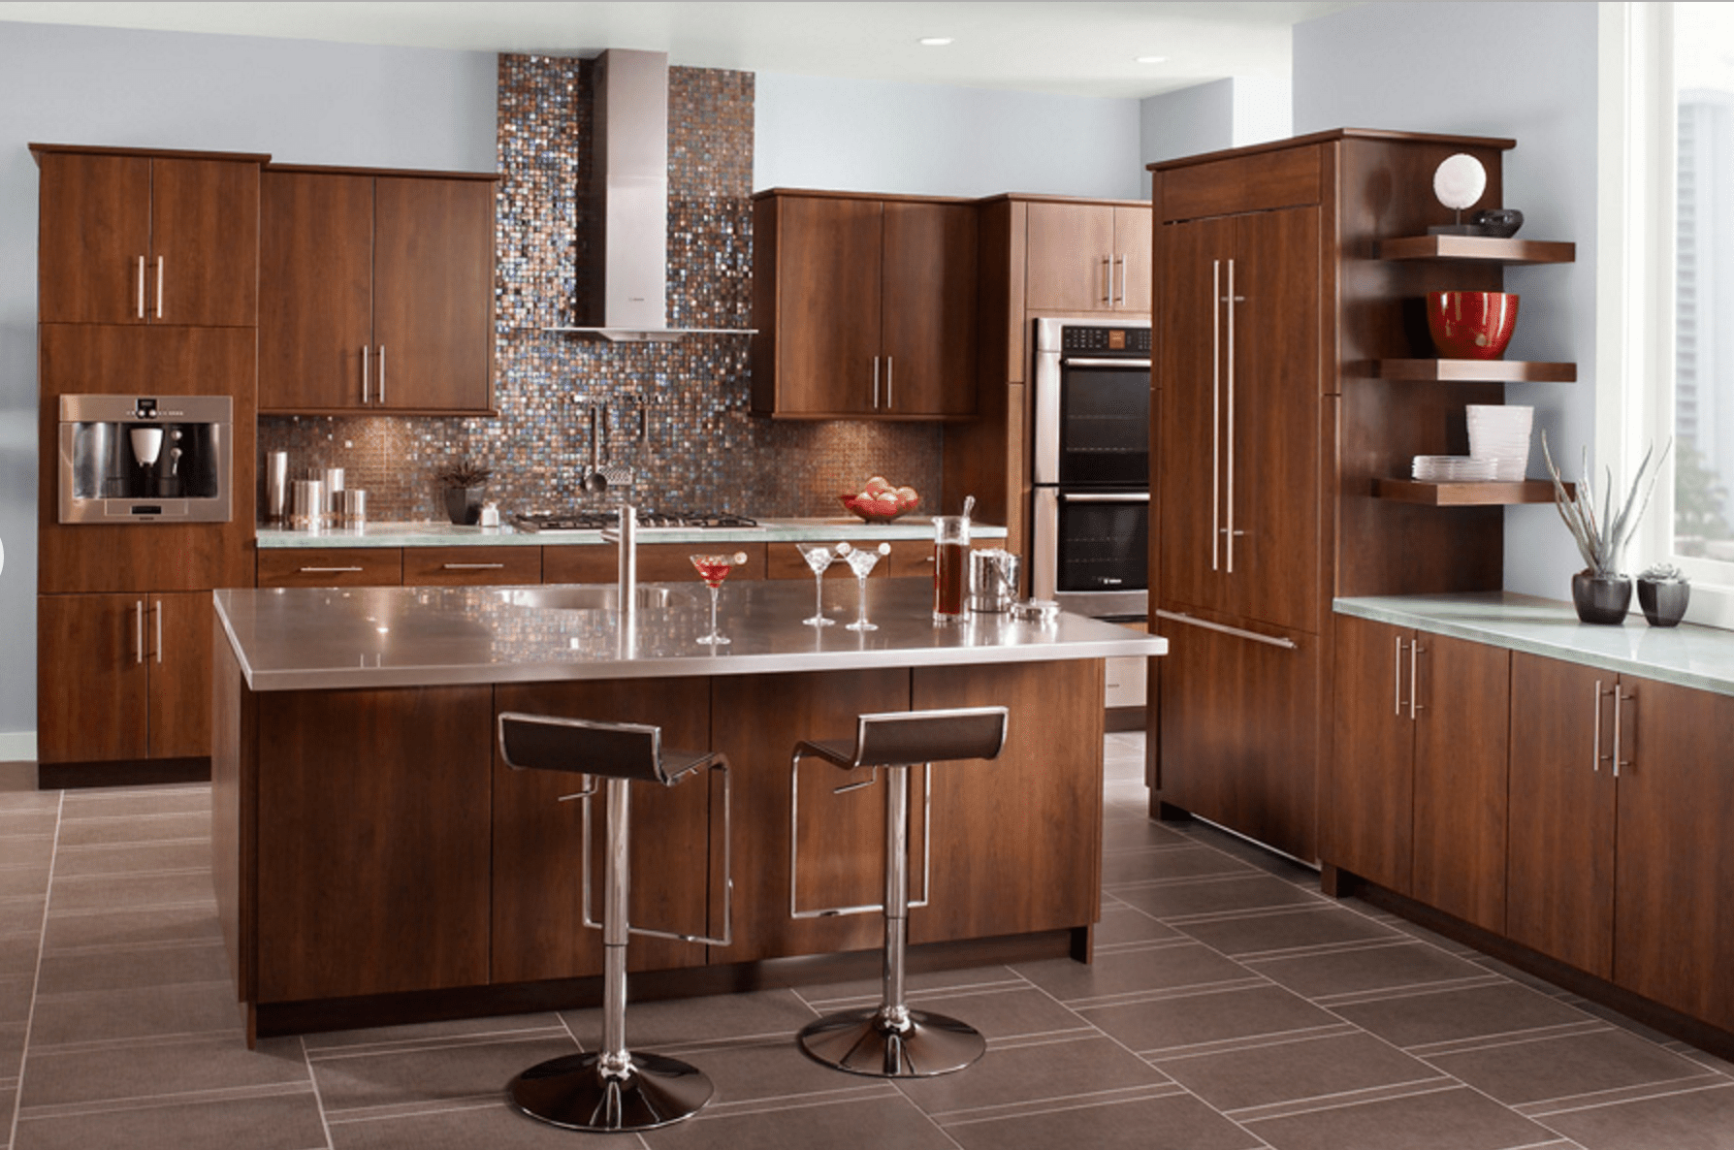 3 Inspiring Gray Kitchen Design Ideas - grey kitchen walls with wood cabinets